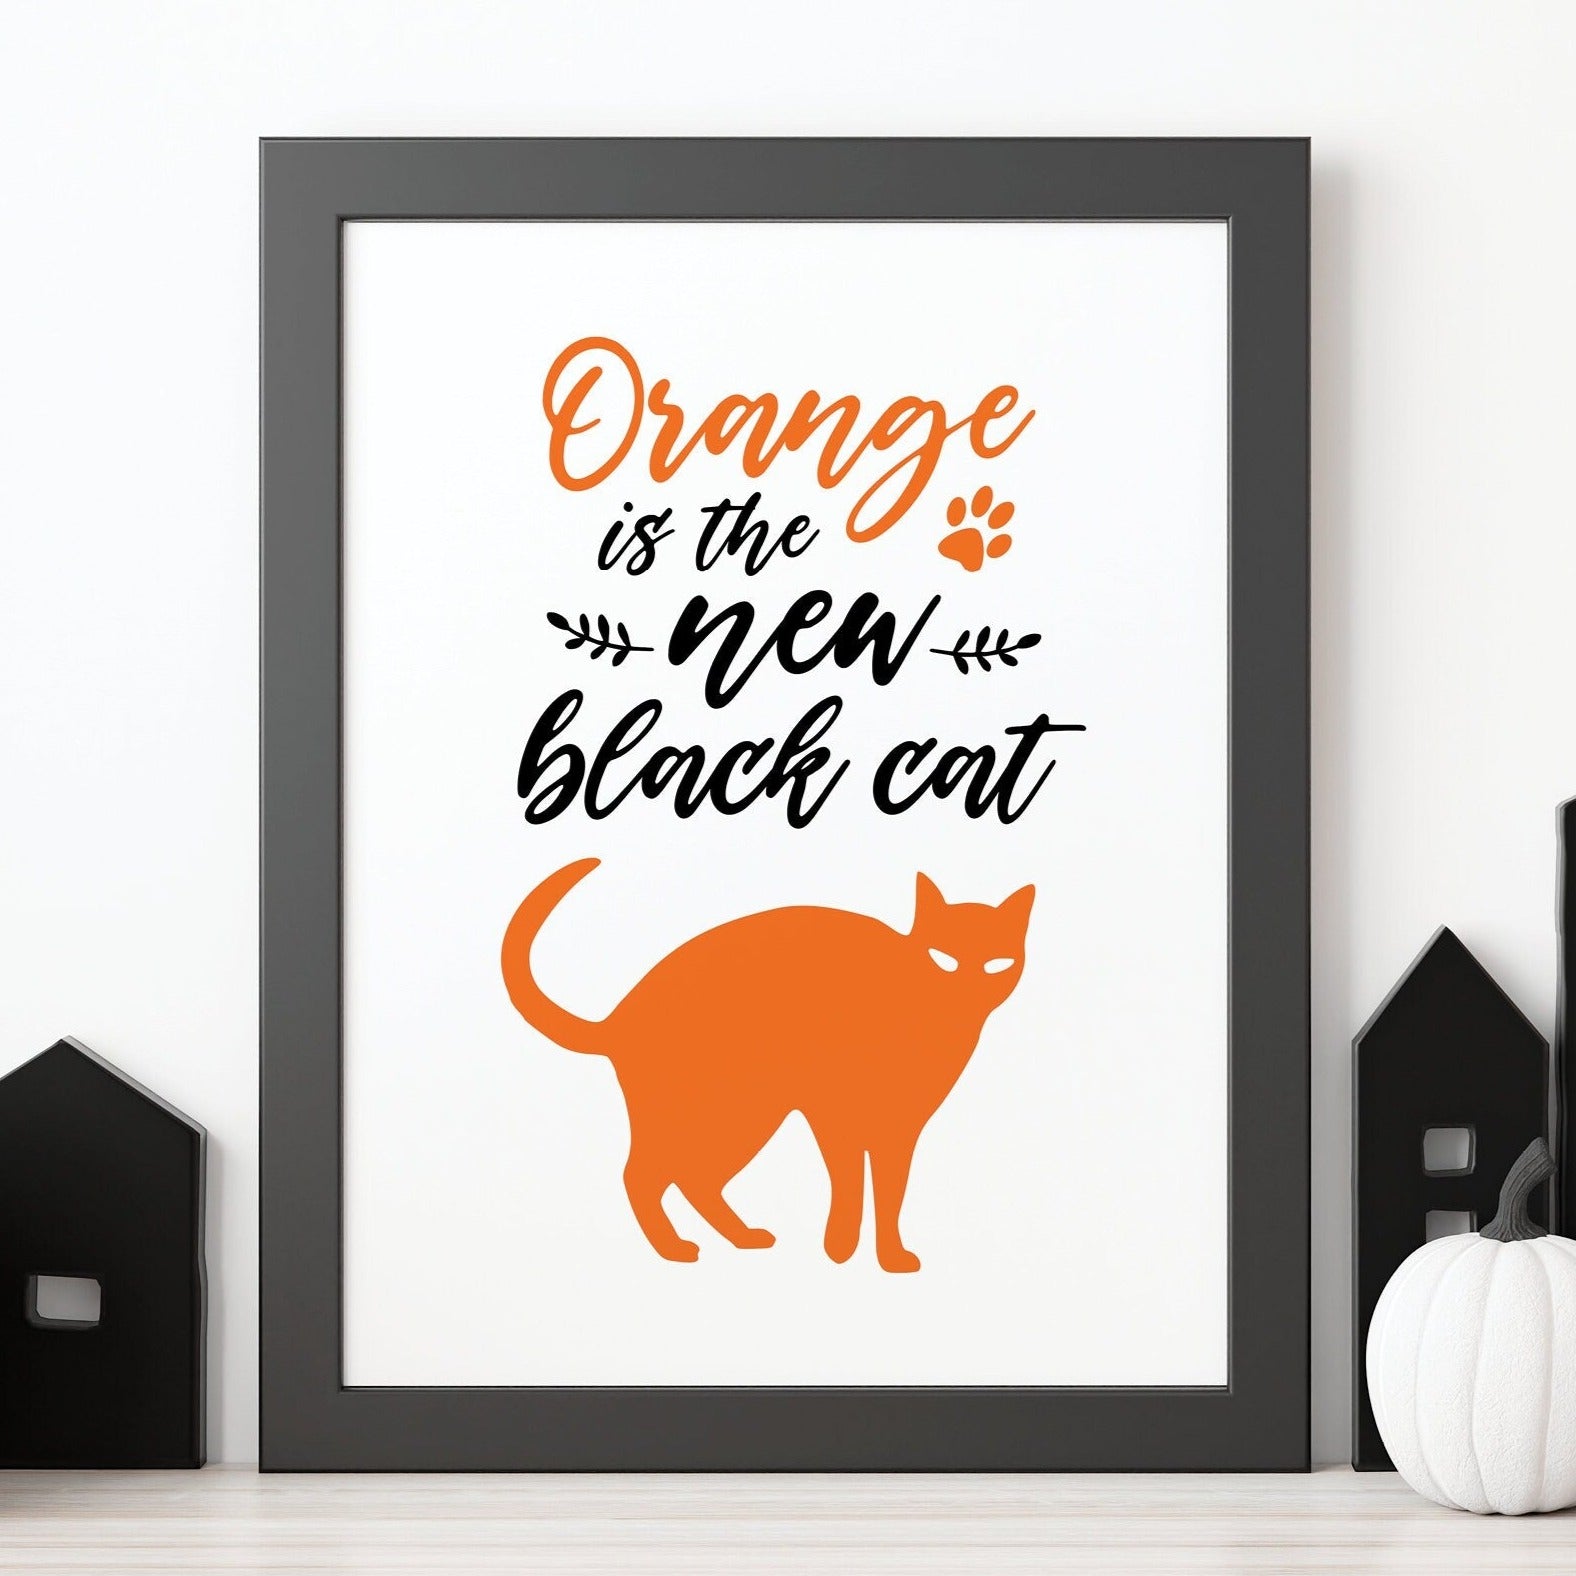 Halloween Cat 8x10" Printable Wall Art - Orange is the new black cat - Cute, funny mantel art for fall. JPG digital download, print at home.